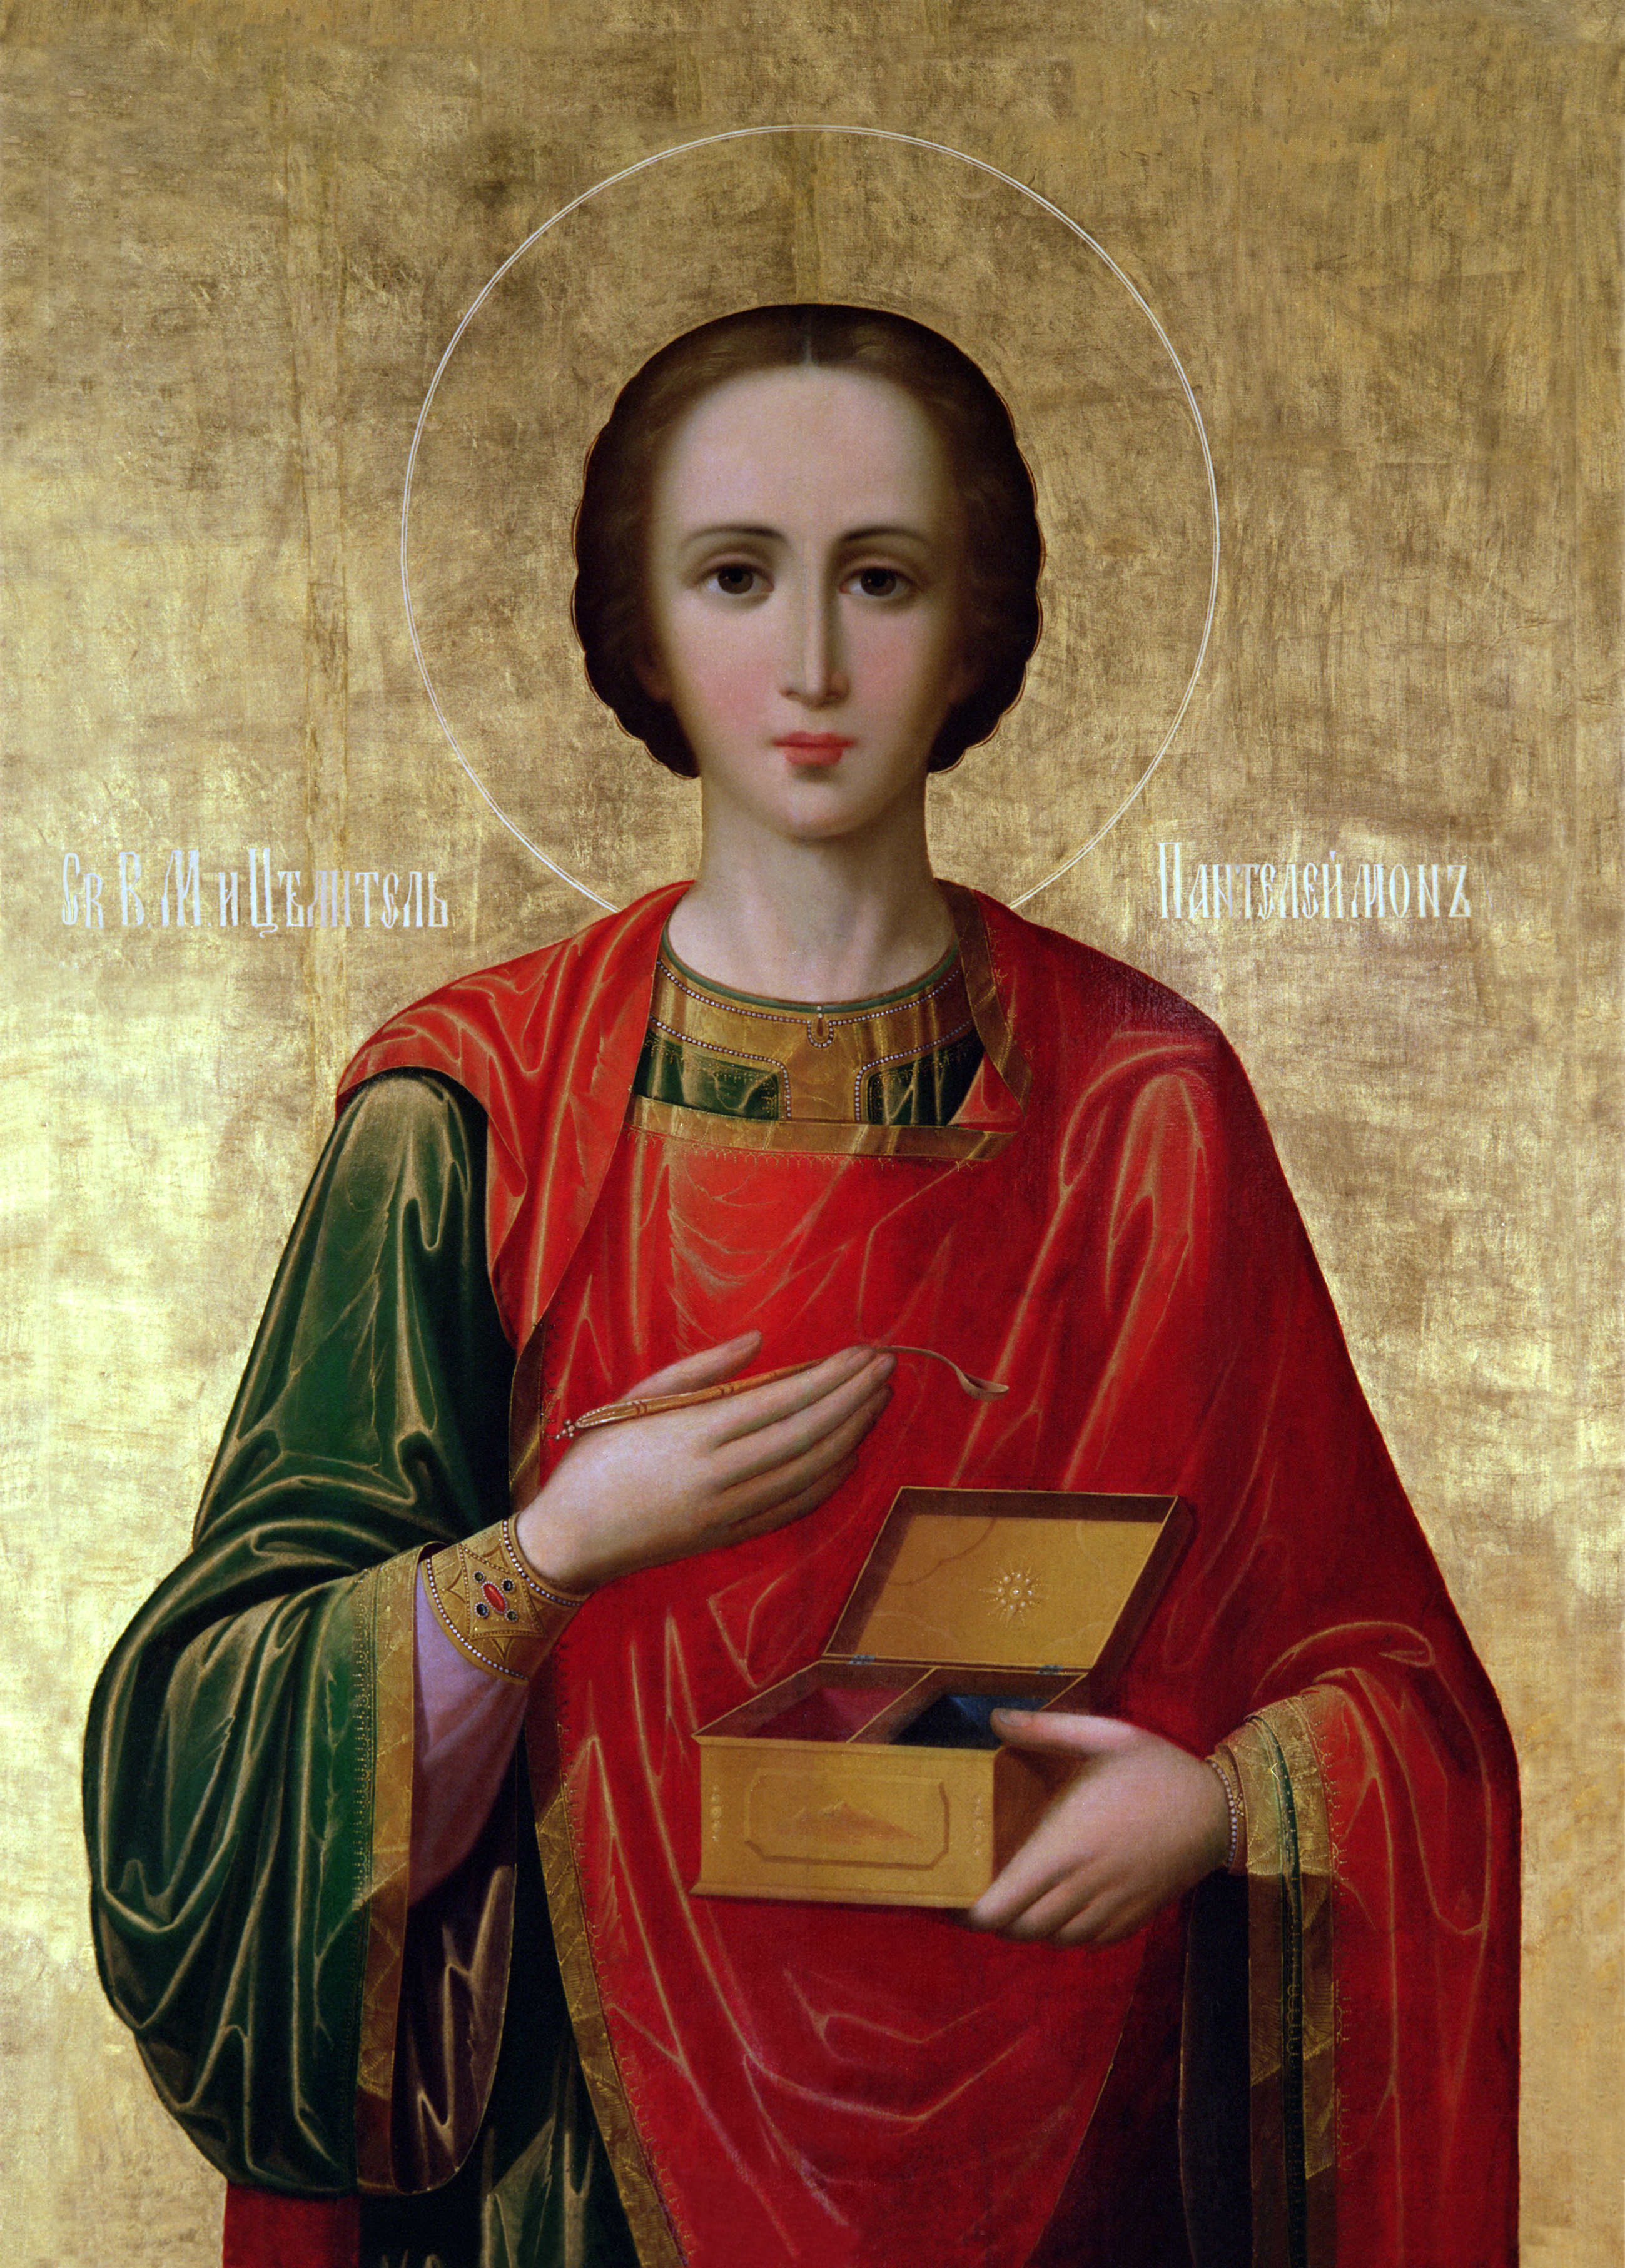 Ребенок святому пантелеймону. Икона Святого Пантелеймона целителя.